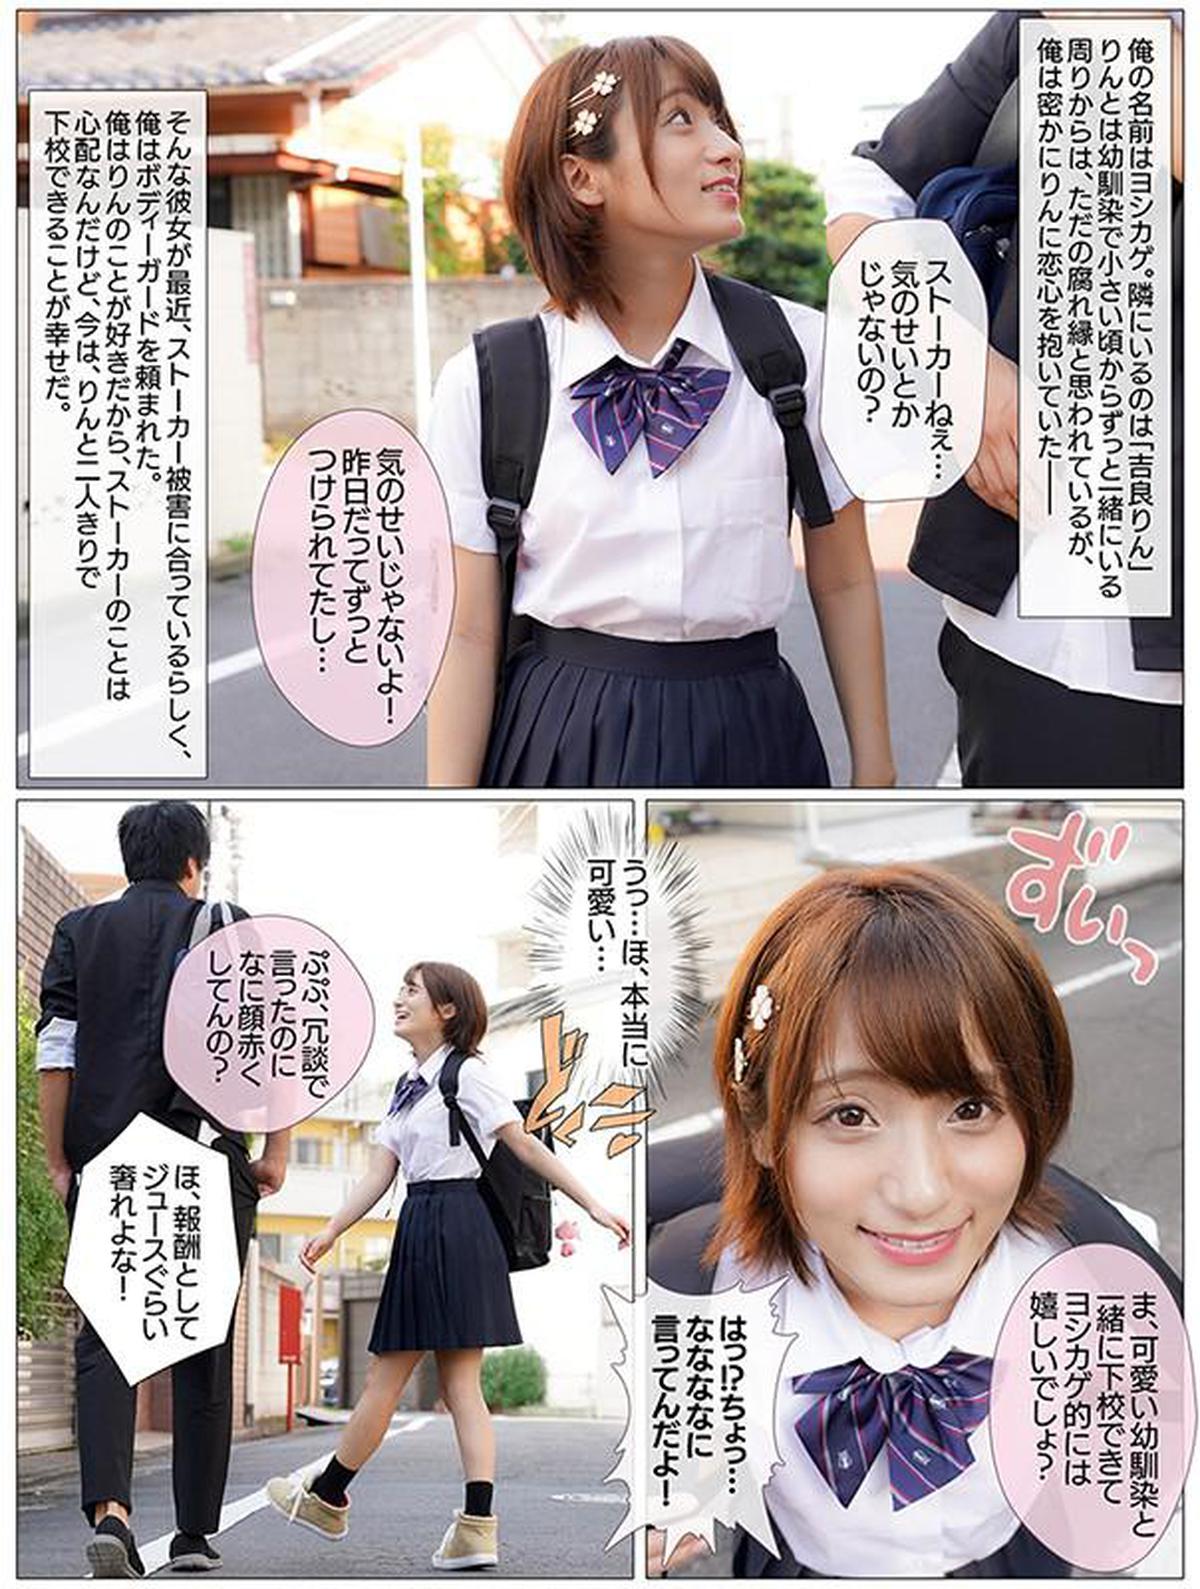 6000Kbps FHD MKON-041 Rin Kira Diminta Pengawal Saat Pulang Sekolah Oleh Teman Masa Kecil Yang Menguntit Rusak